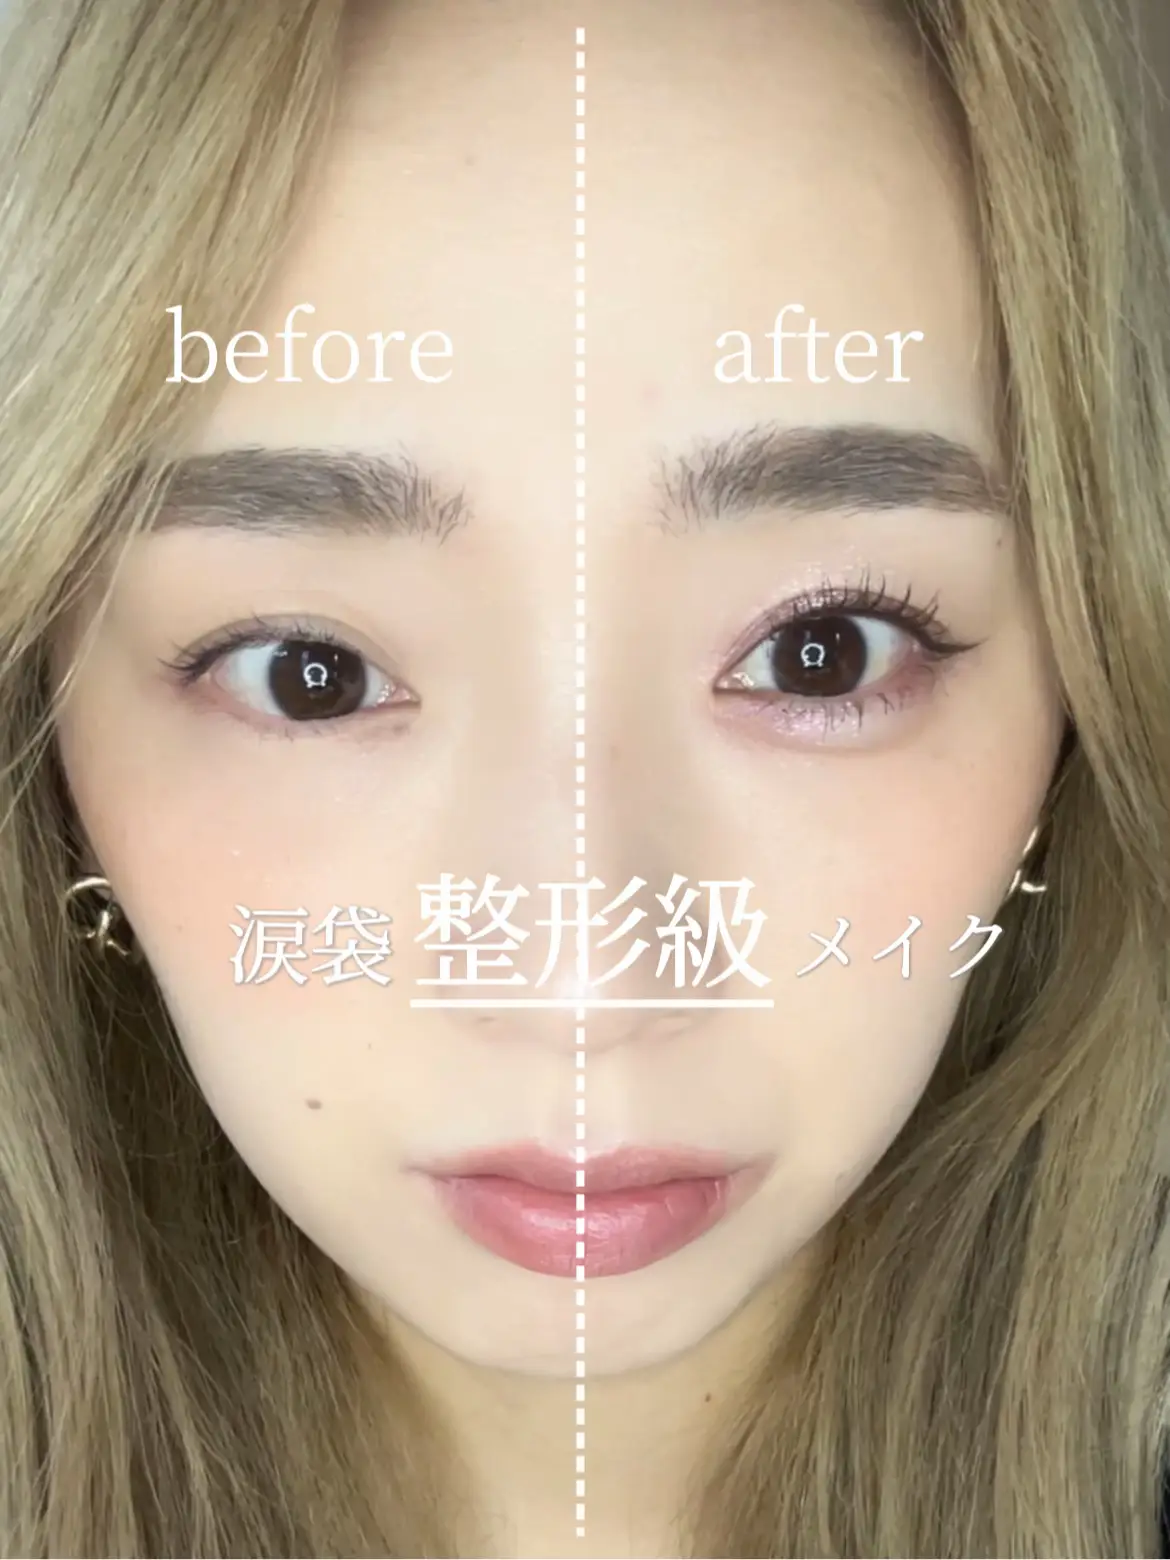 Eye bag plastic surgery? Makeup ❤ ︎